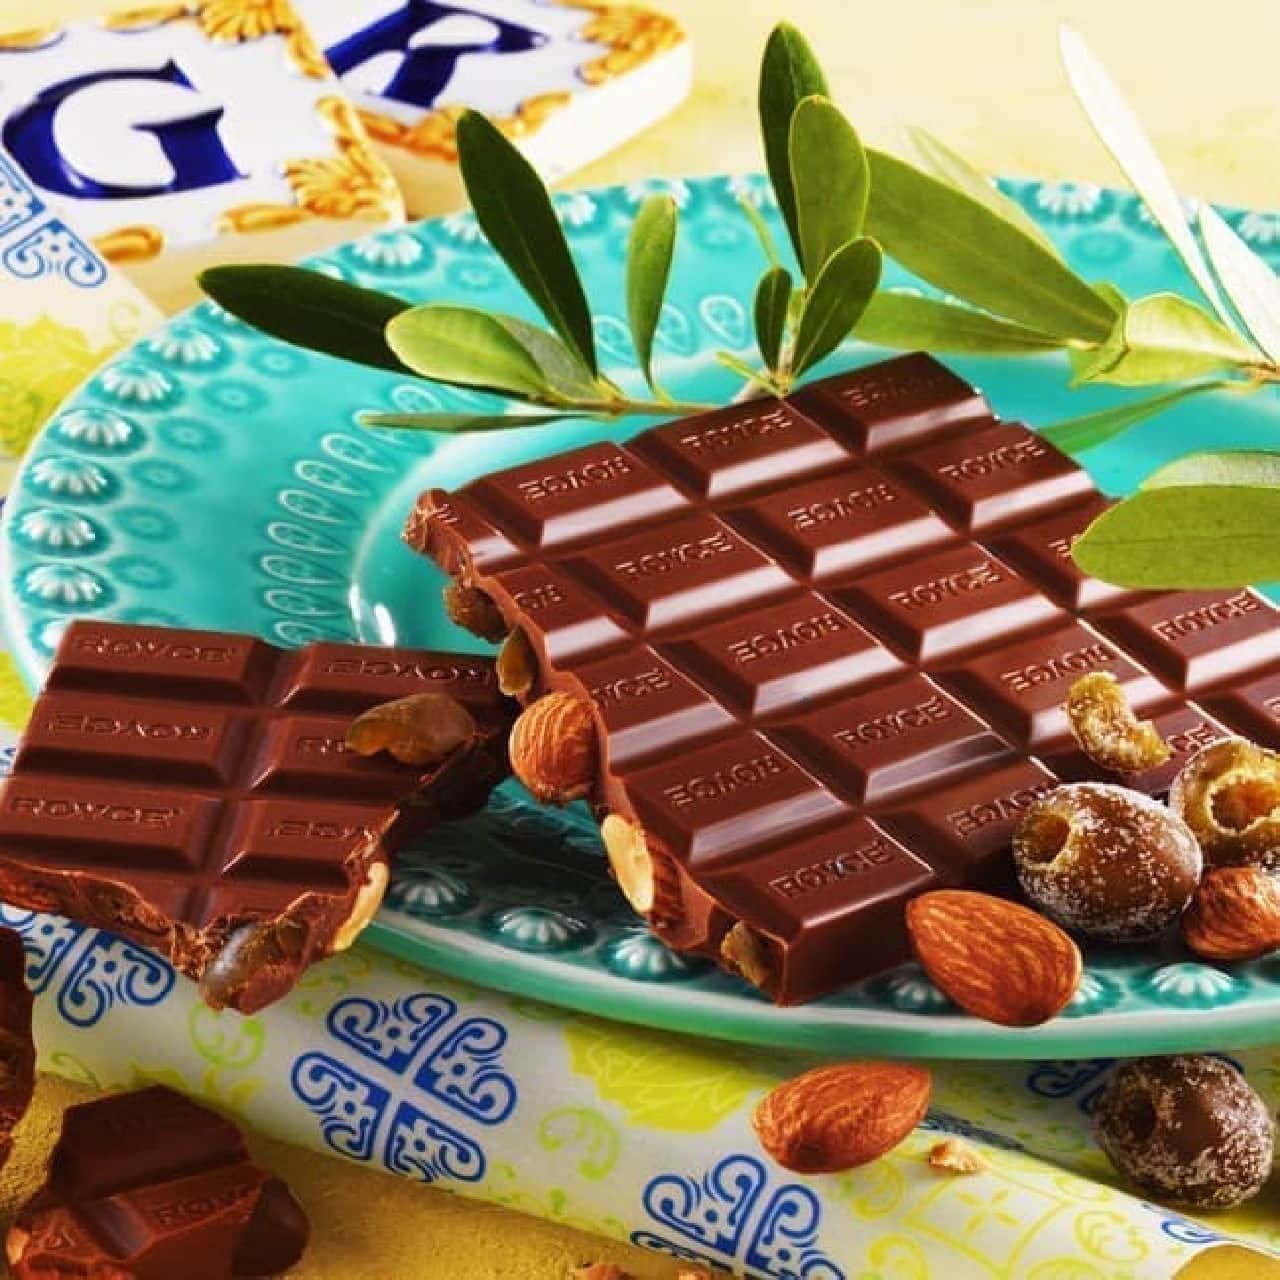 Lloyds Portugal Fair "Chocolate Plate [Almond & Olive]"